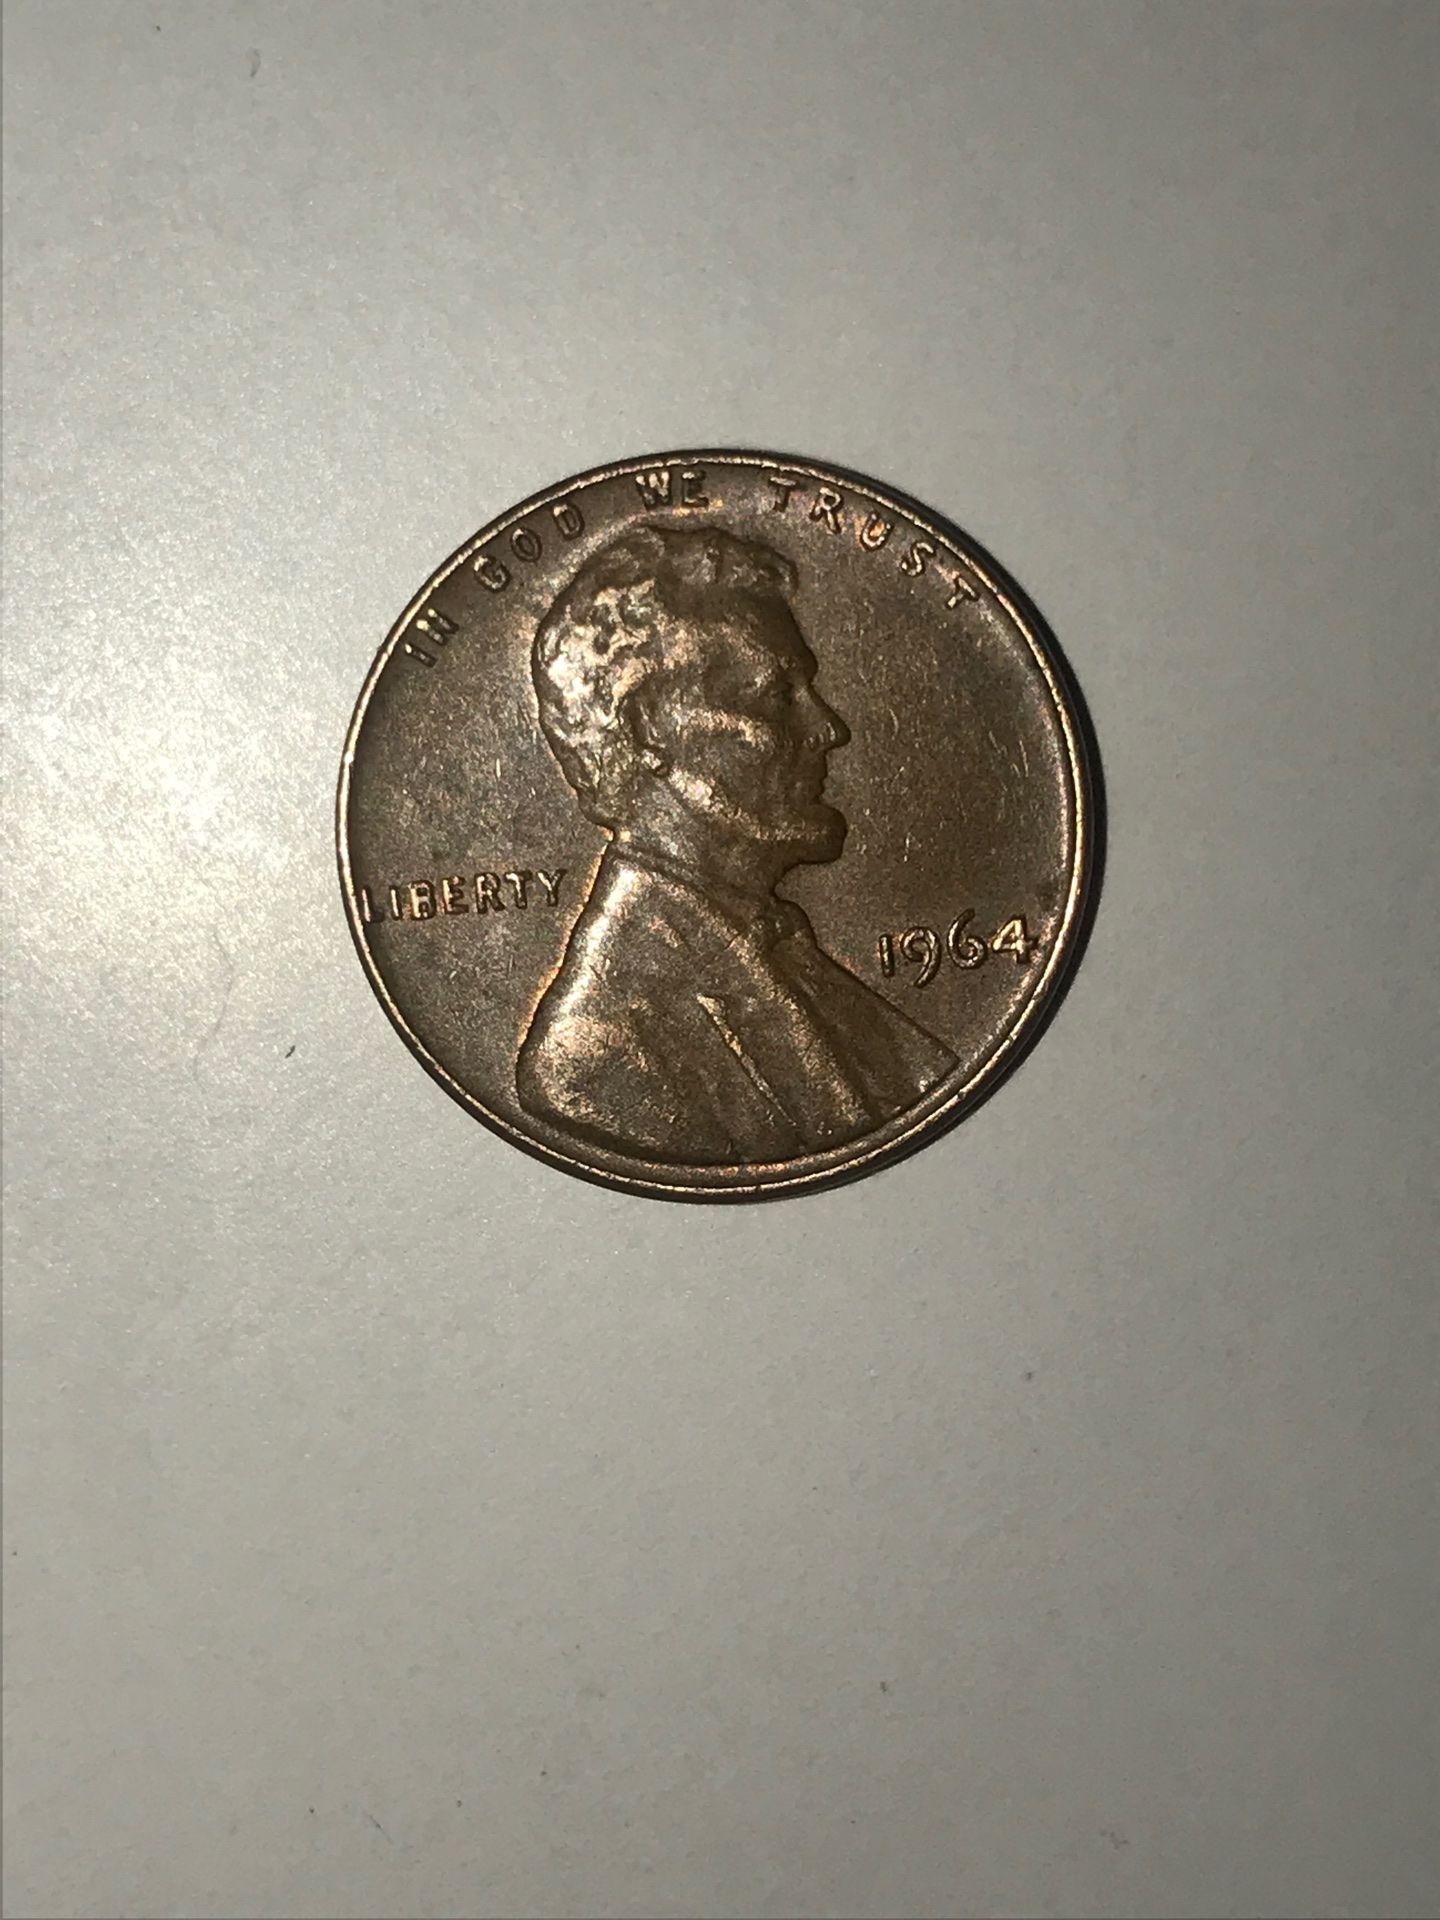 1964 penny